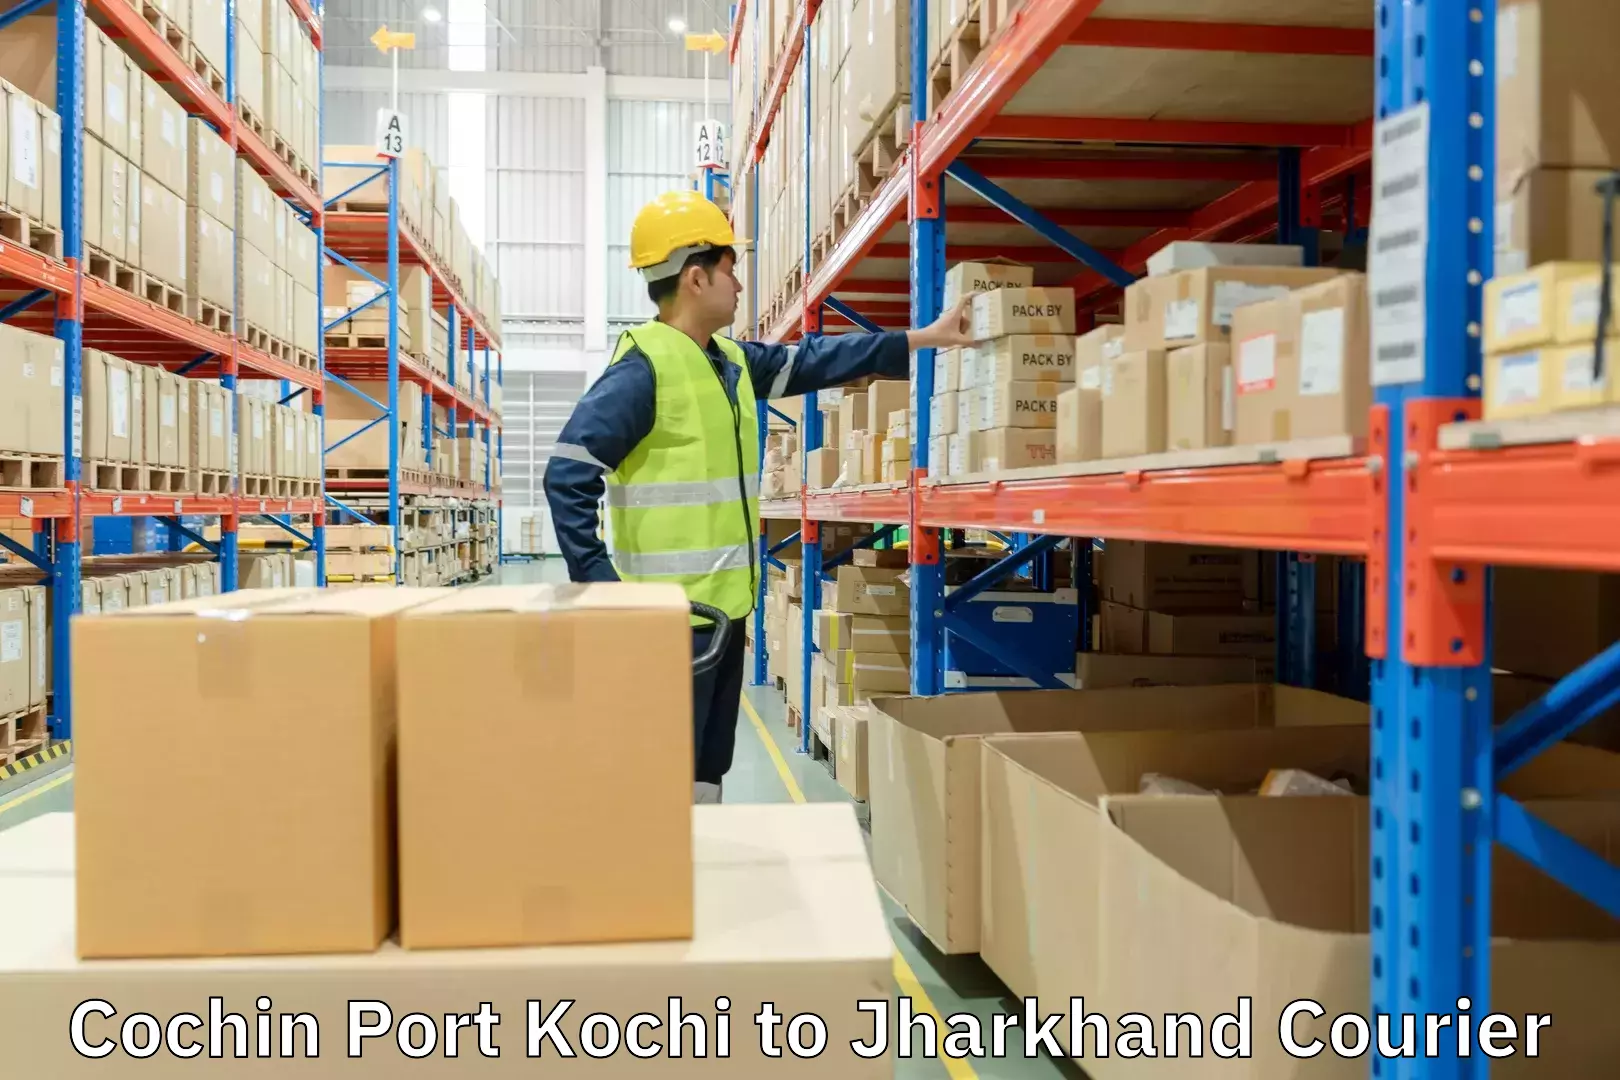 Courier service comparison Cochin Port Kochi to Jharkhand